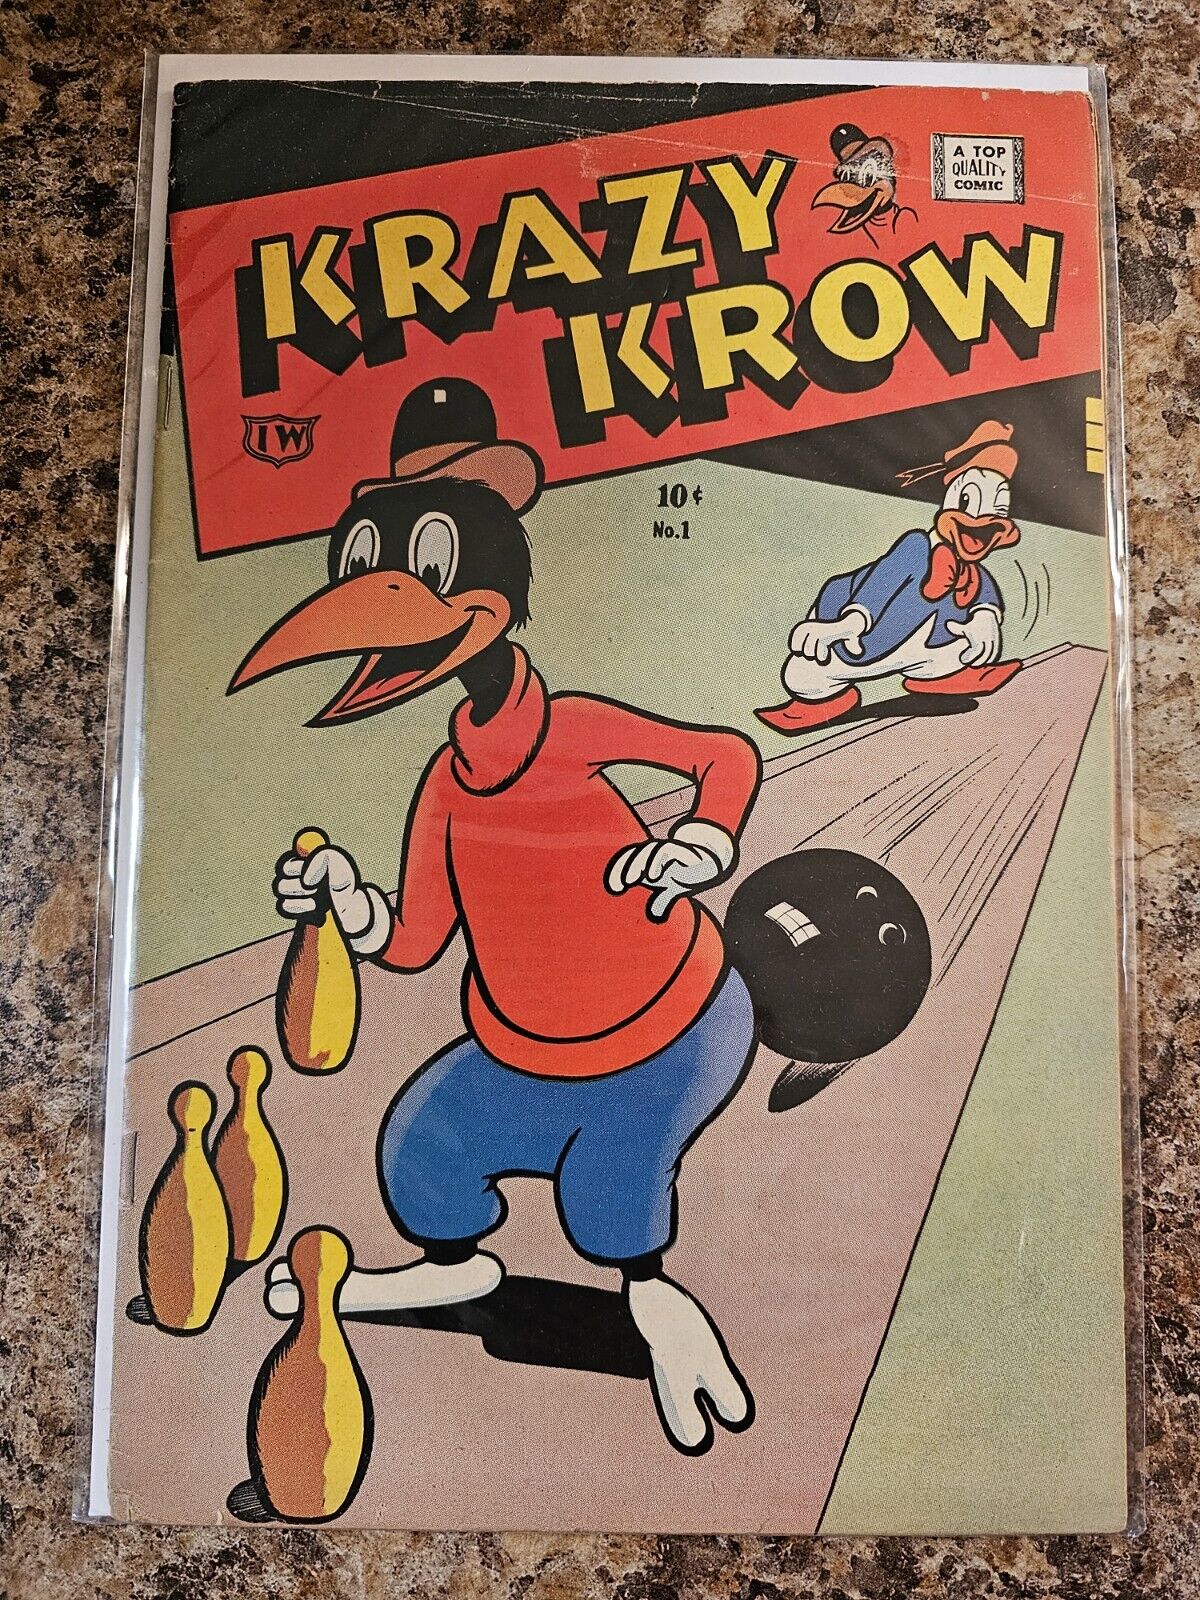 Krazy Krow #1 (1958) Silver Age I.W. Publications Top Quality Comics VG